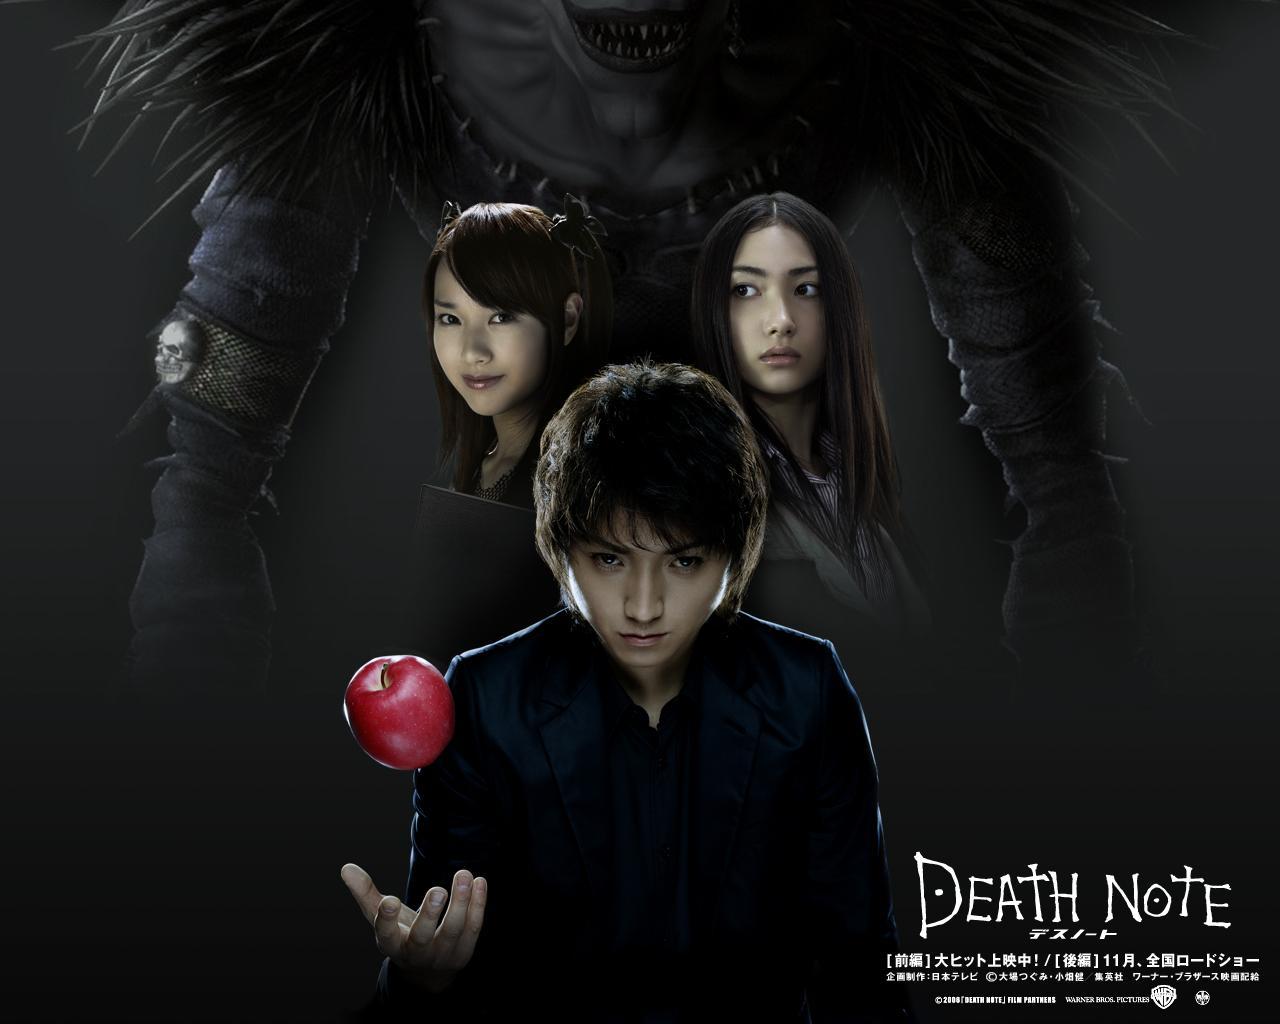 Death Note (2006 film) - Wikipedia